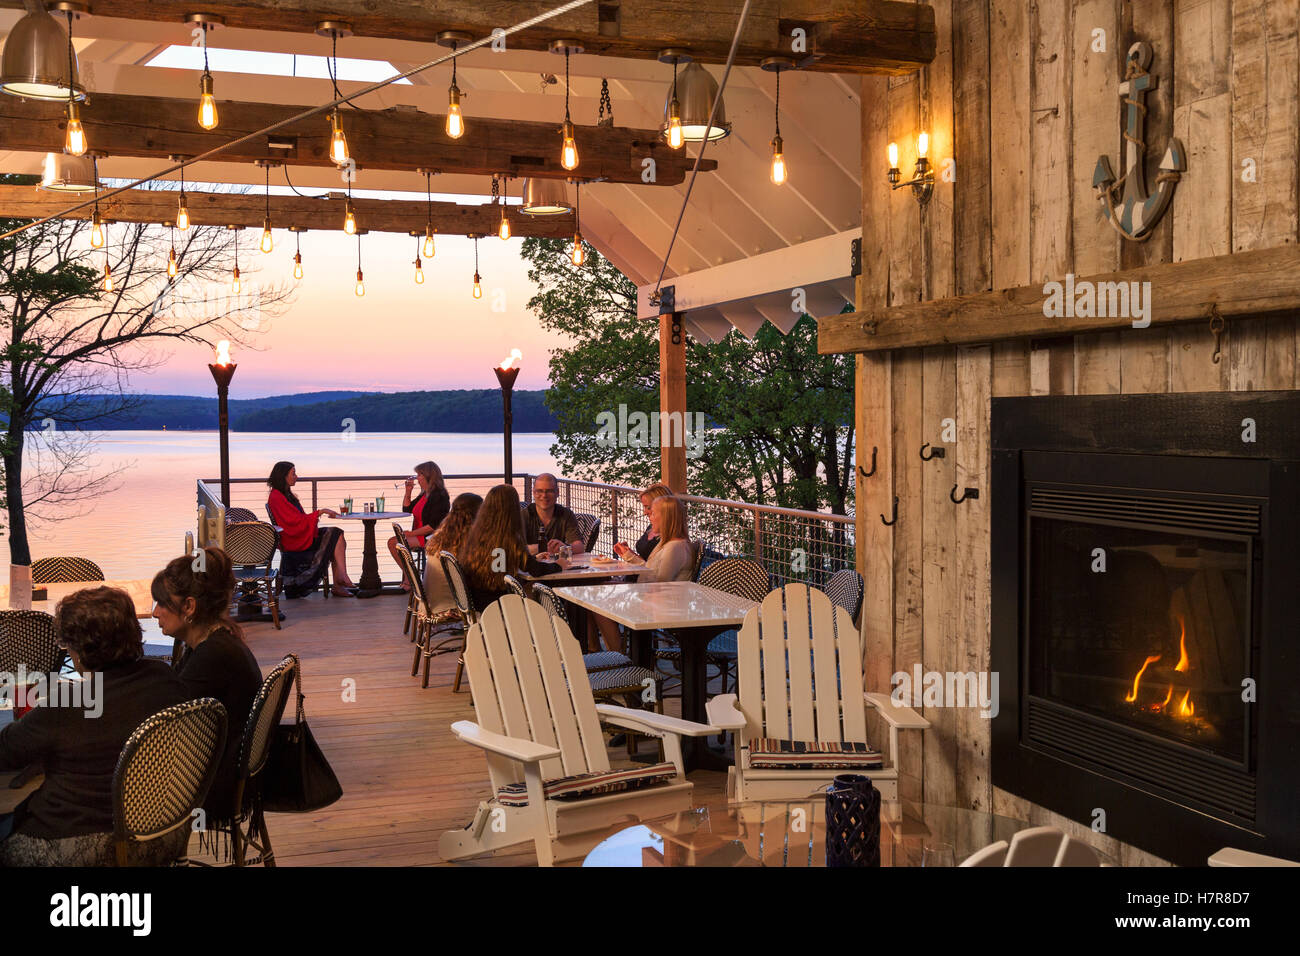 Silver Birches Resort, Lake Wallenpaupack, Hawley, Poconos Region, PA, USA Stock Photo